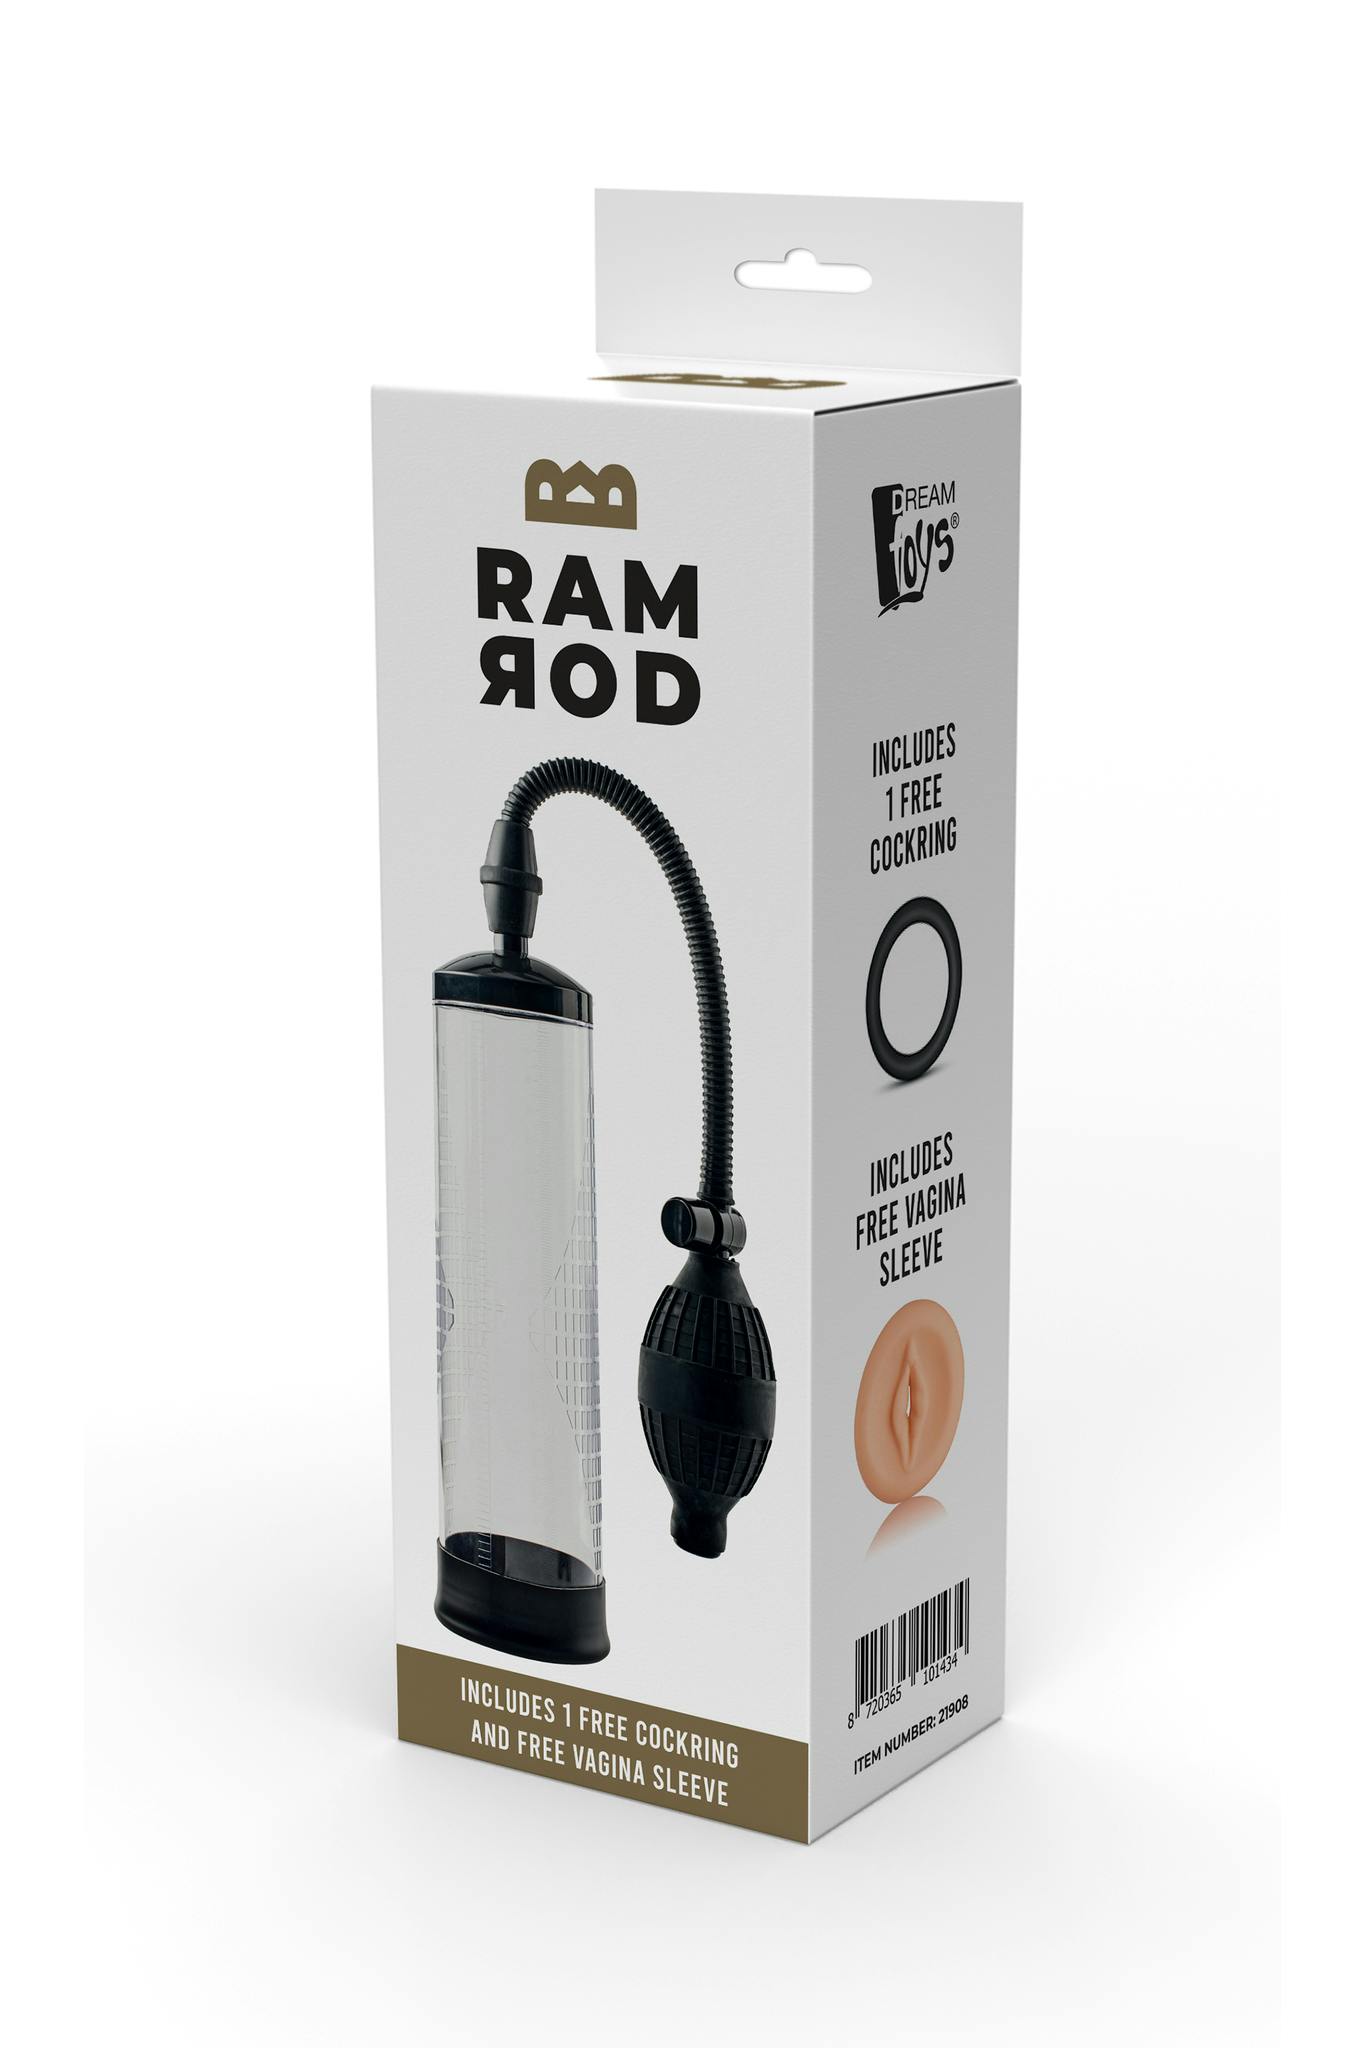 Ramrod - Classic penis pump